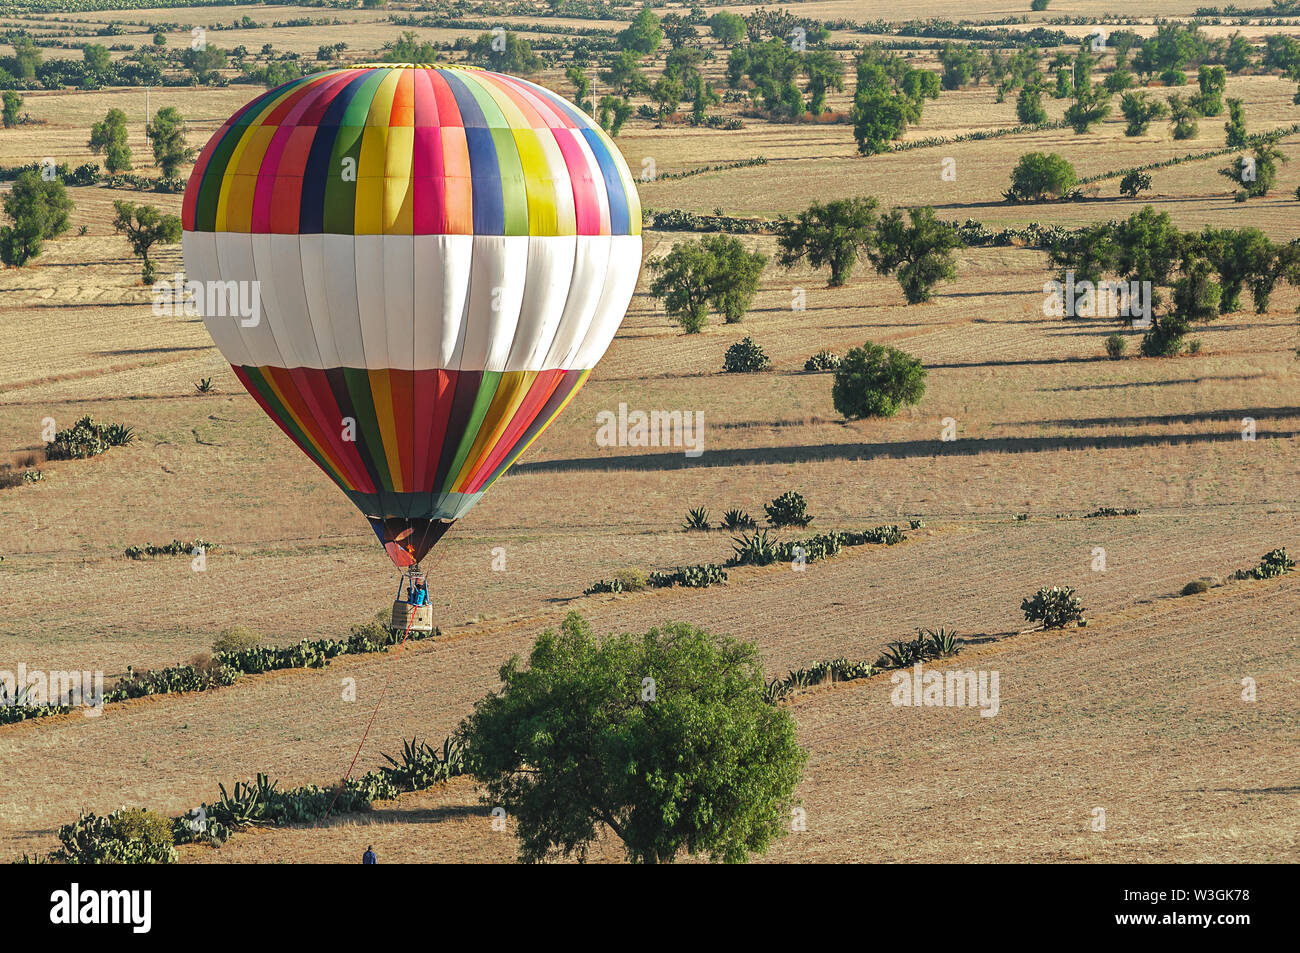 Colorful hot air balloon landing in rural farm field Stock Photo